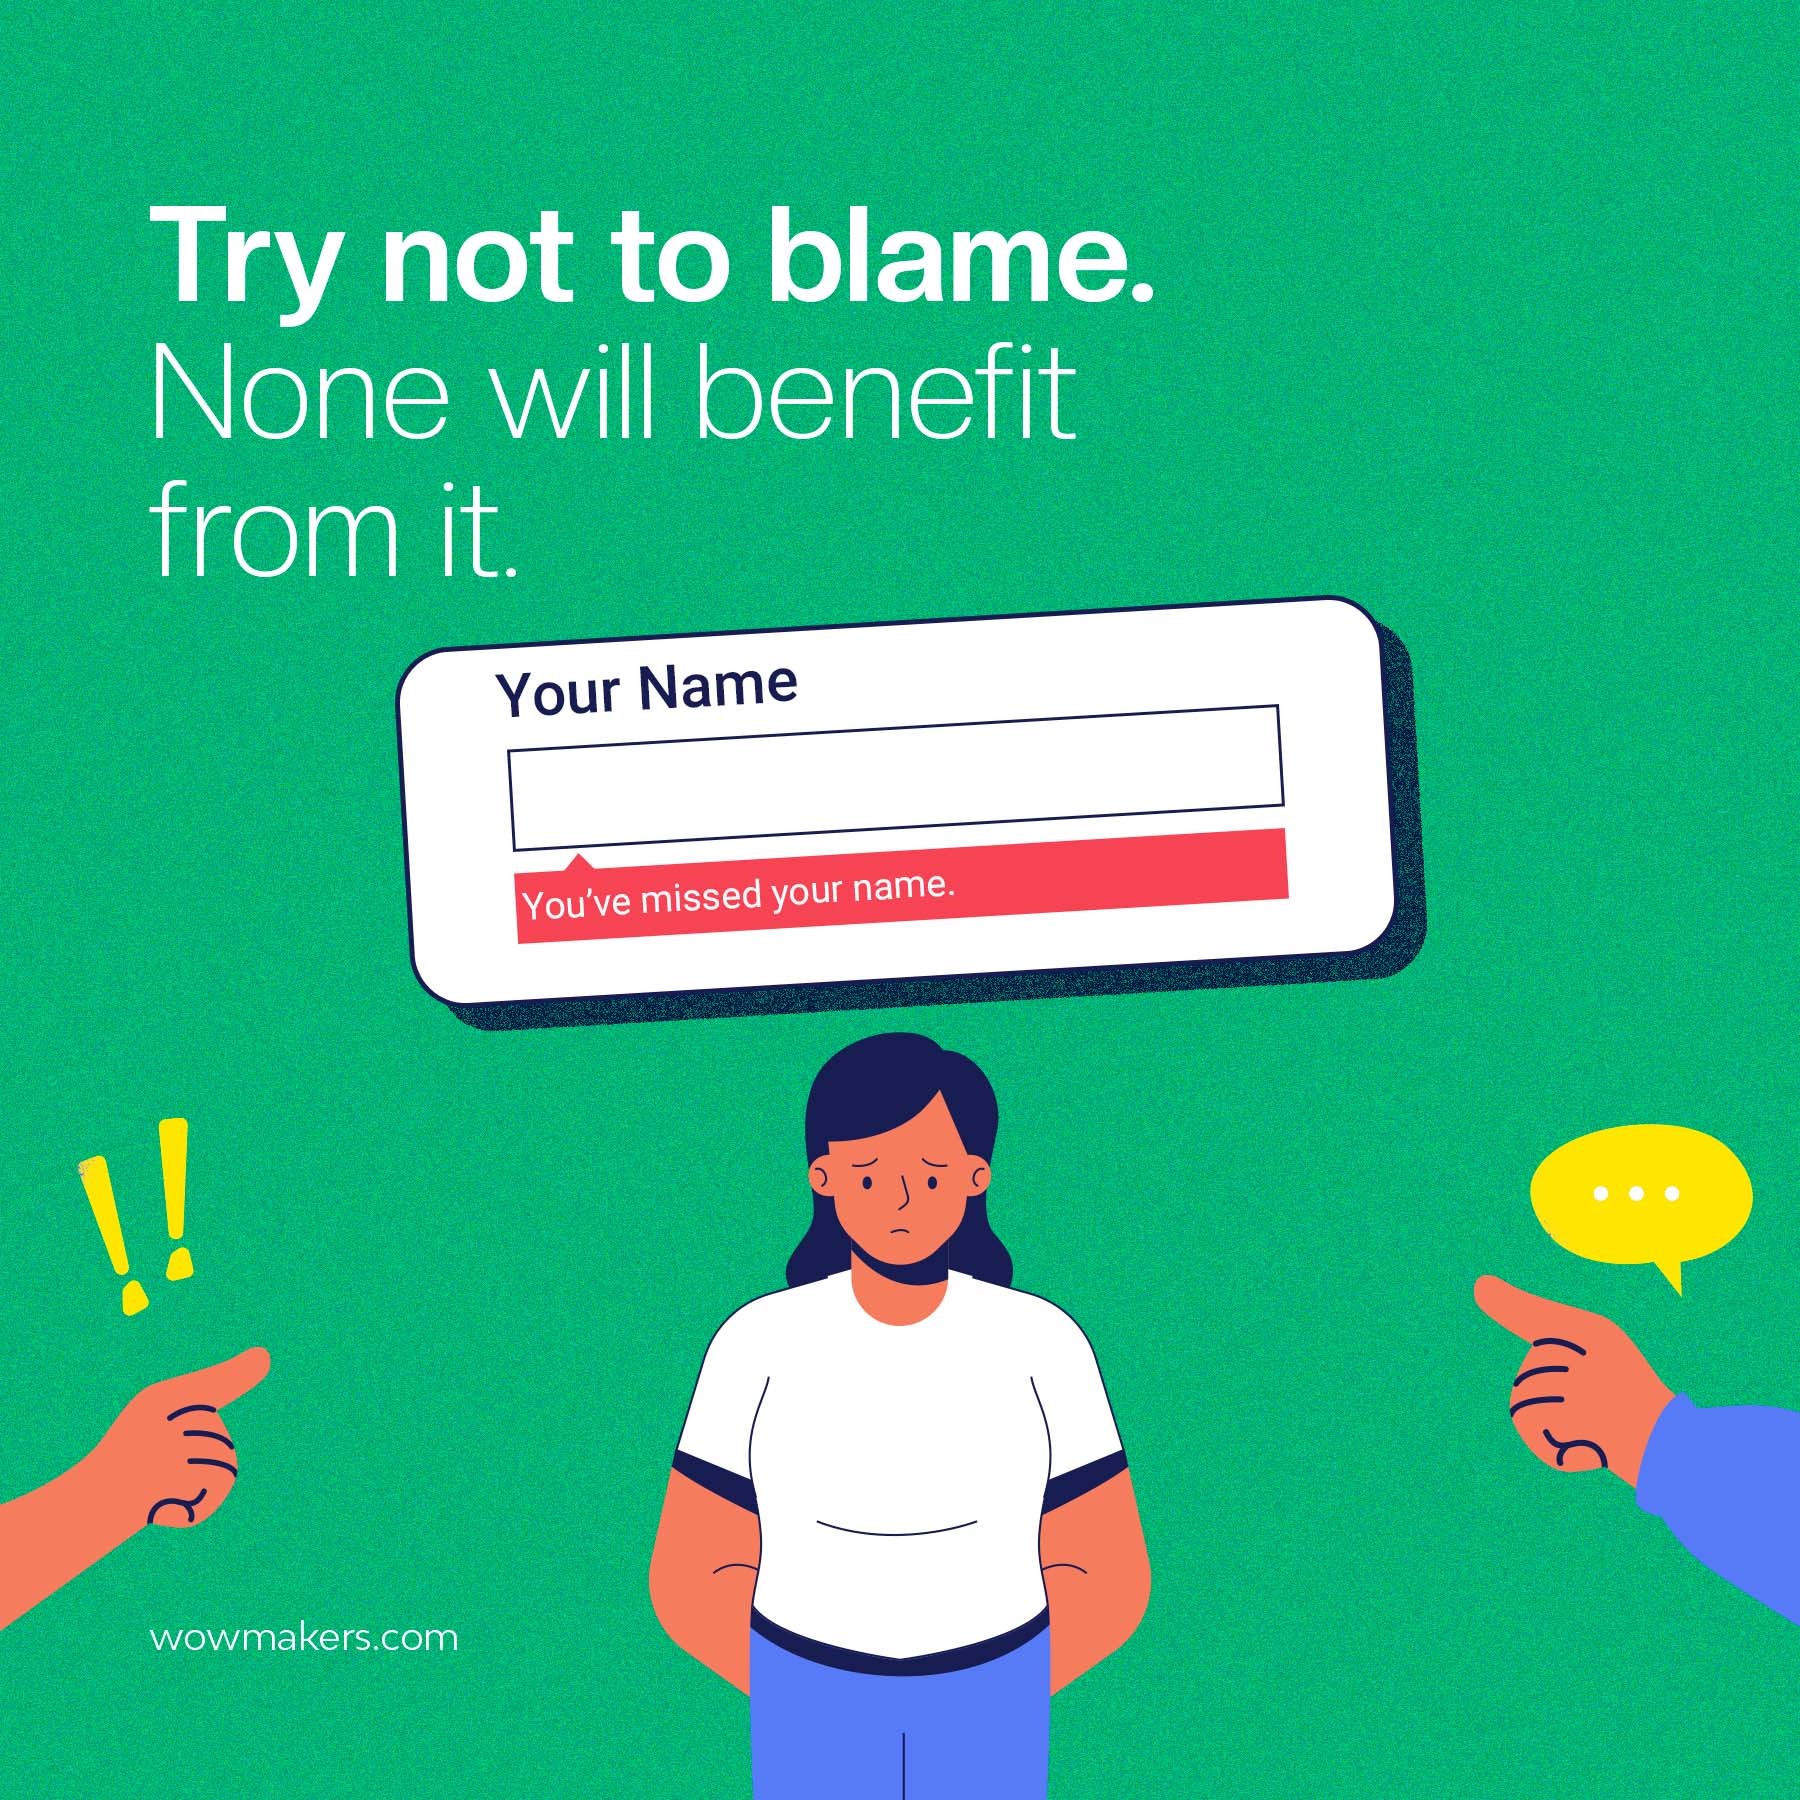 user friendly error messages - Do not blame